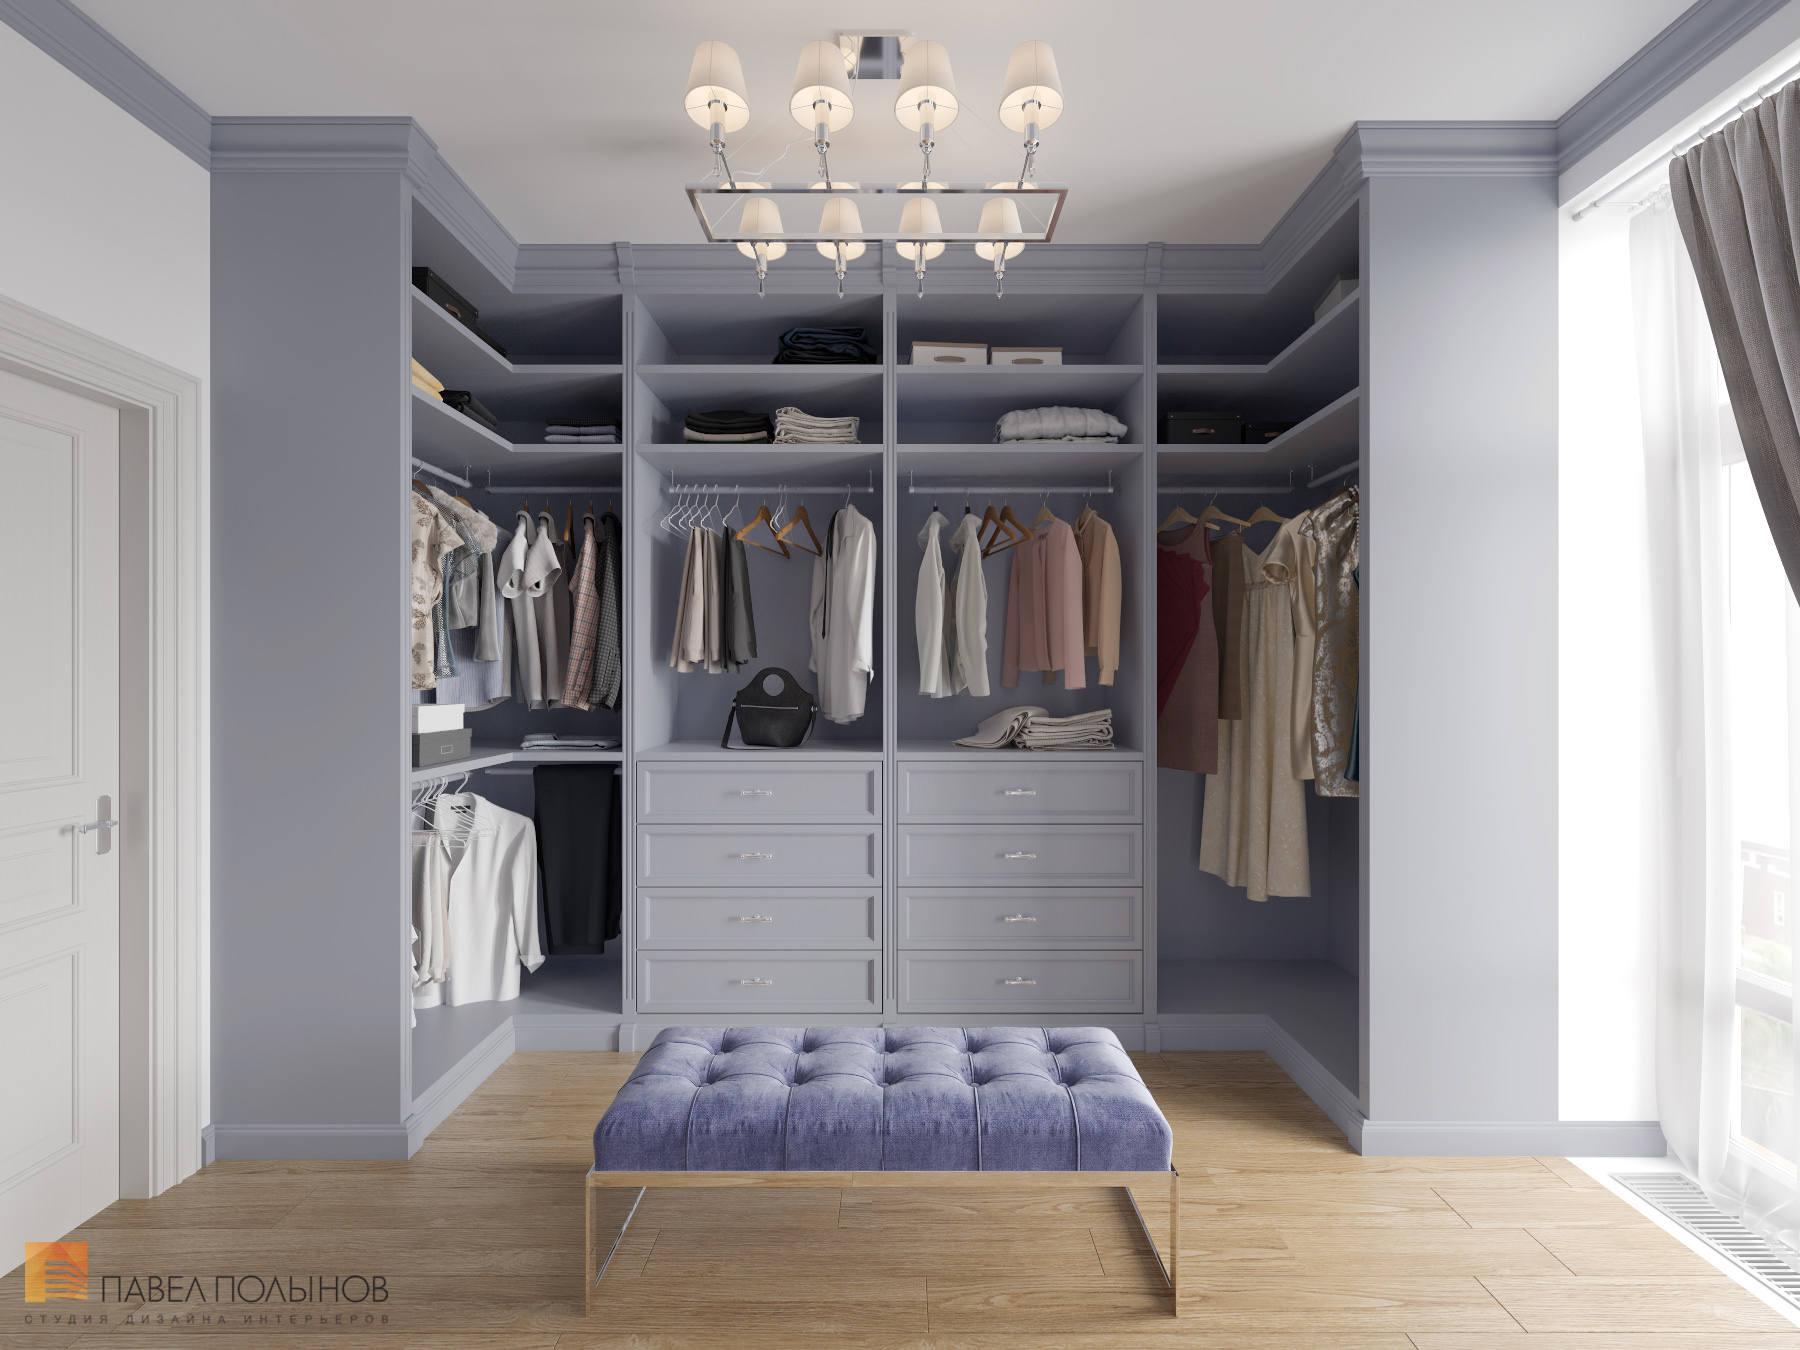 Фото дизайн интерьера гардеробной комнаты из проекта «Интерьер квартиры в стиле неоклассики, ЖК «Парадный квартал», 190 кв.м.»